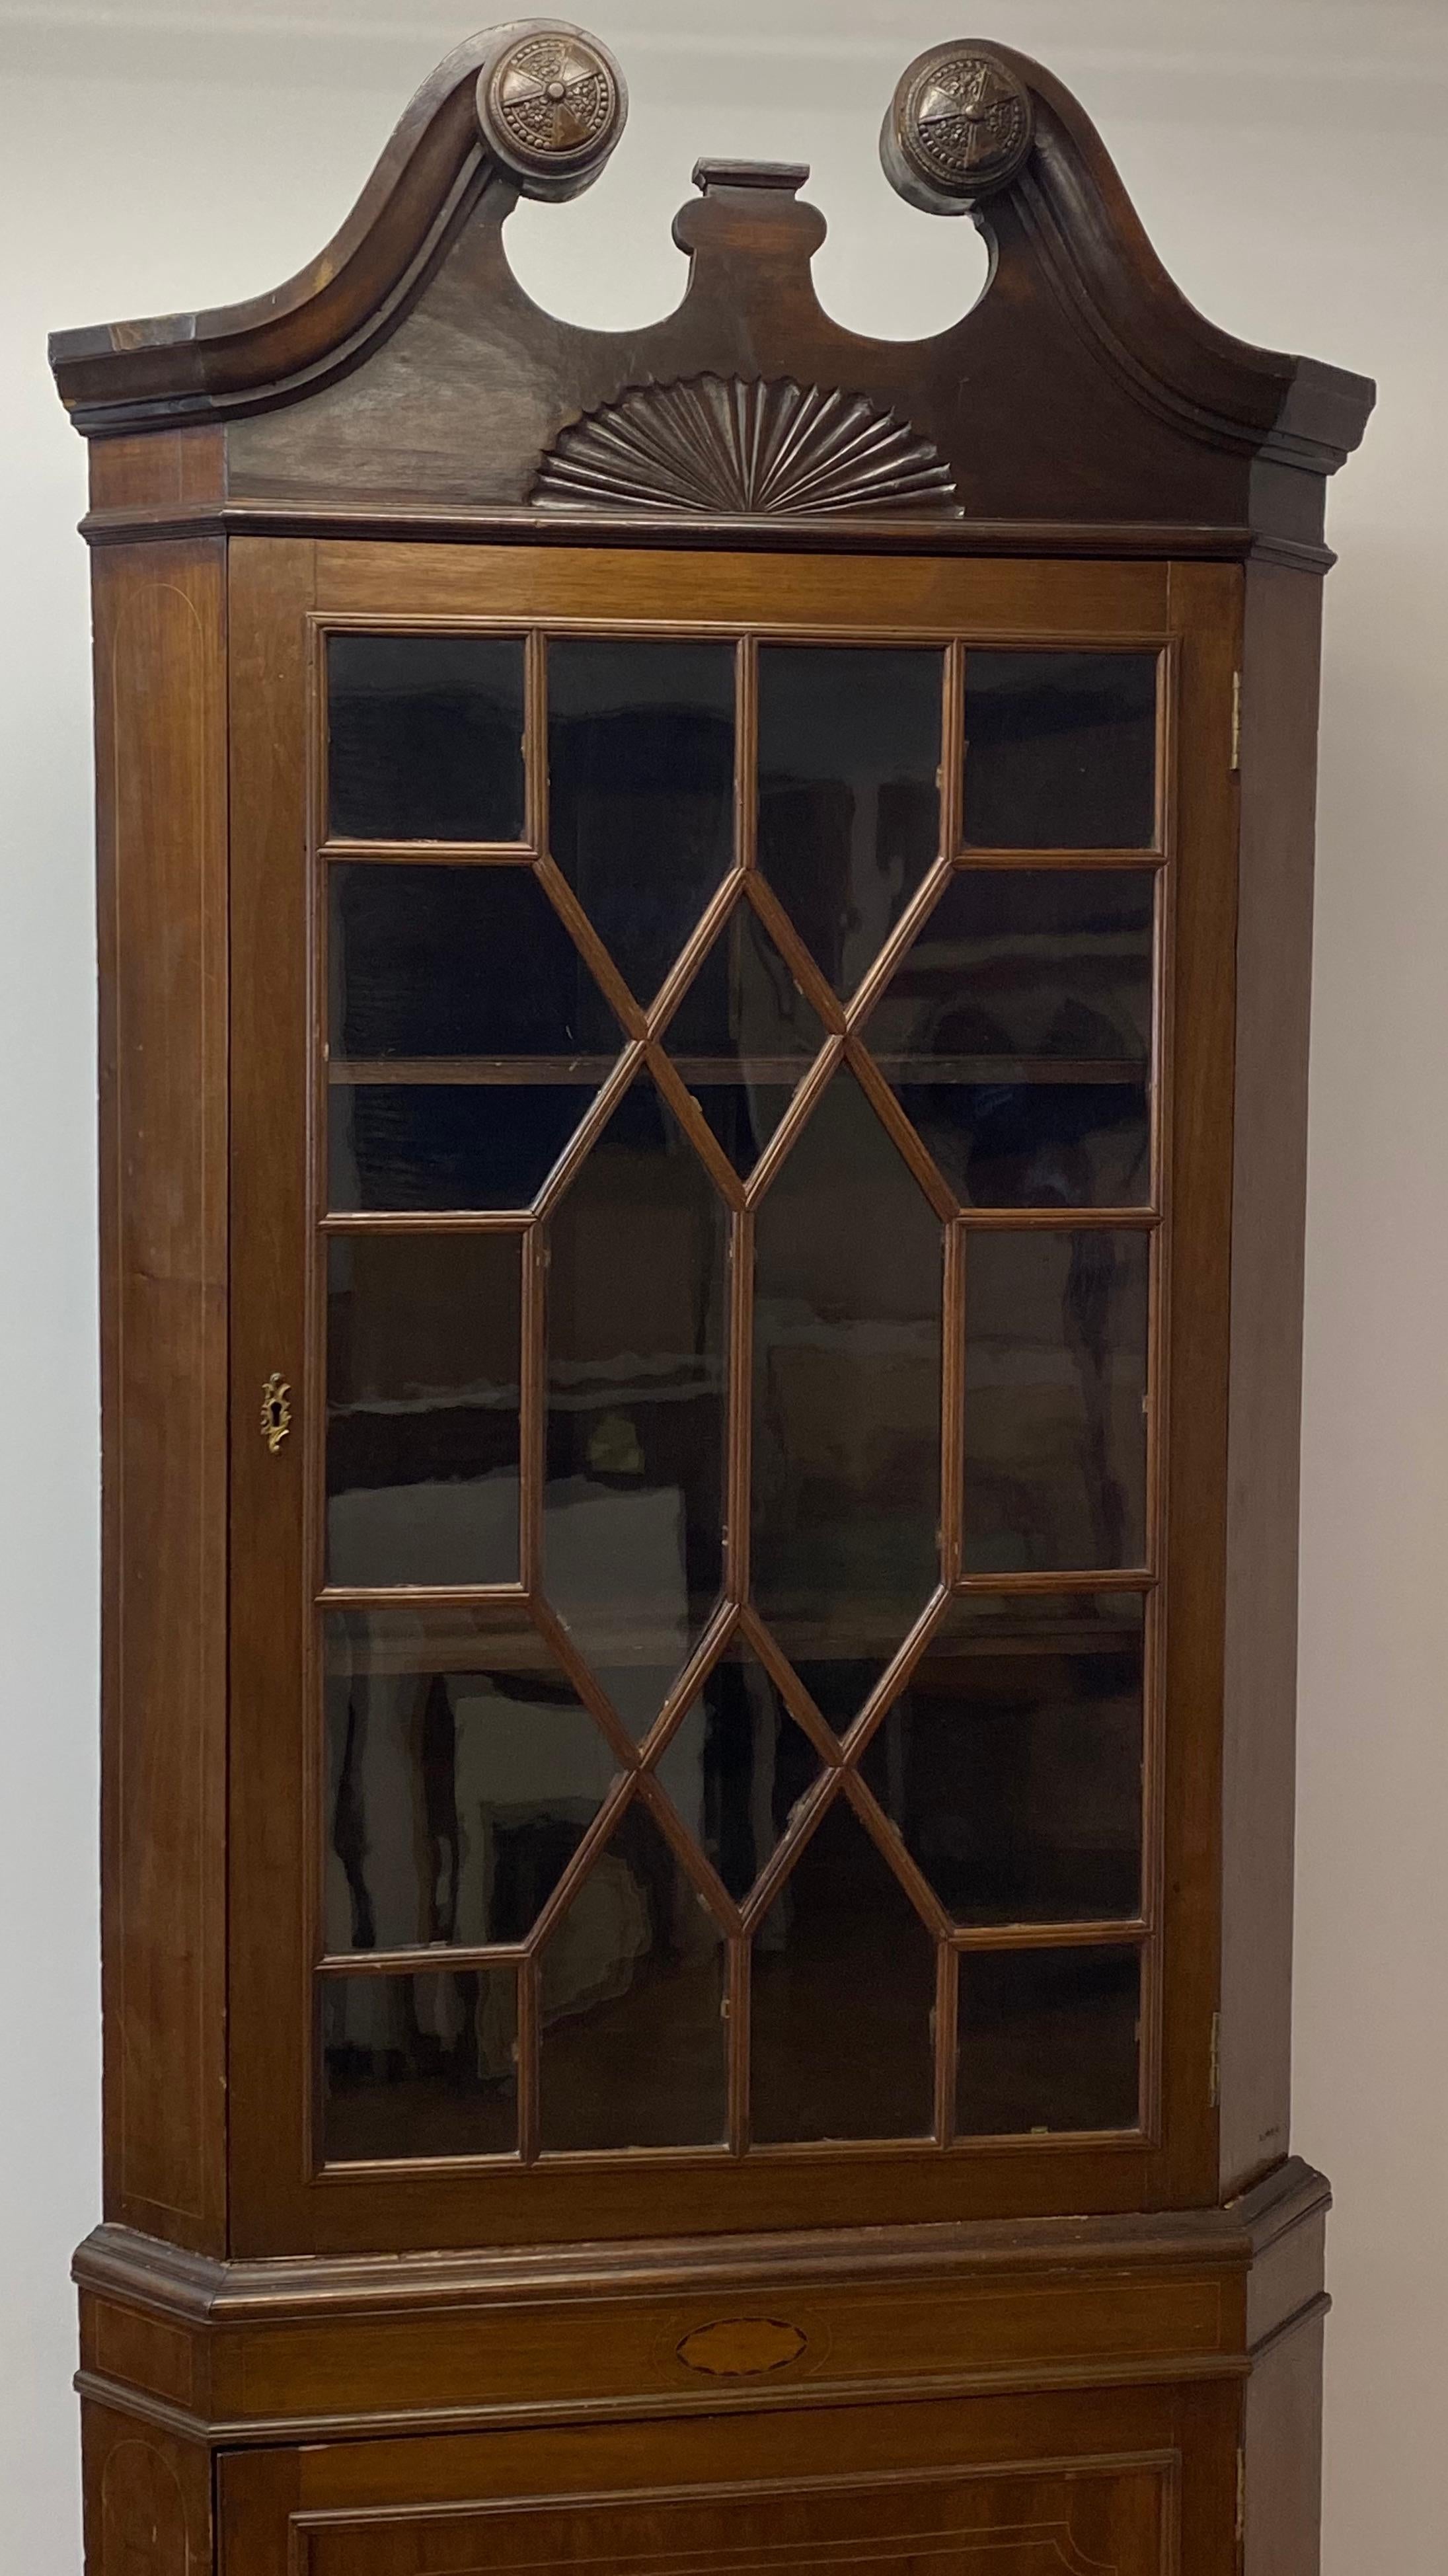 Mid 19th century mahogany corner cabinet c.1870

Measures: 32